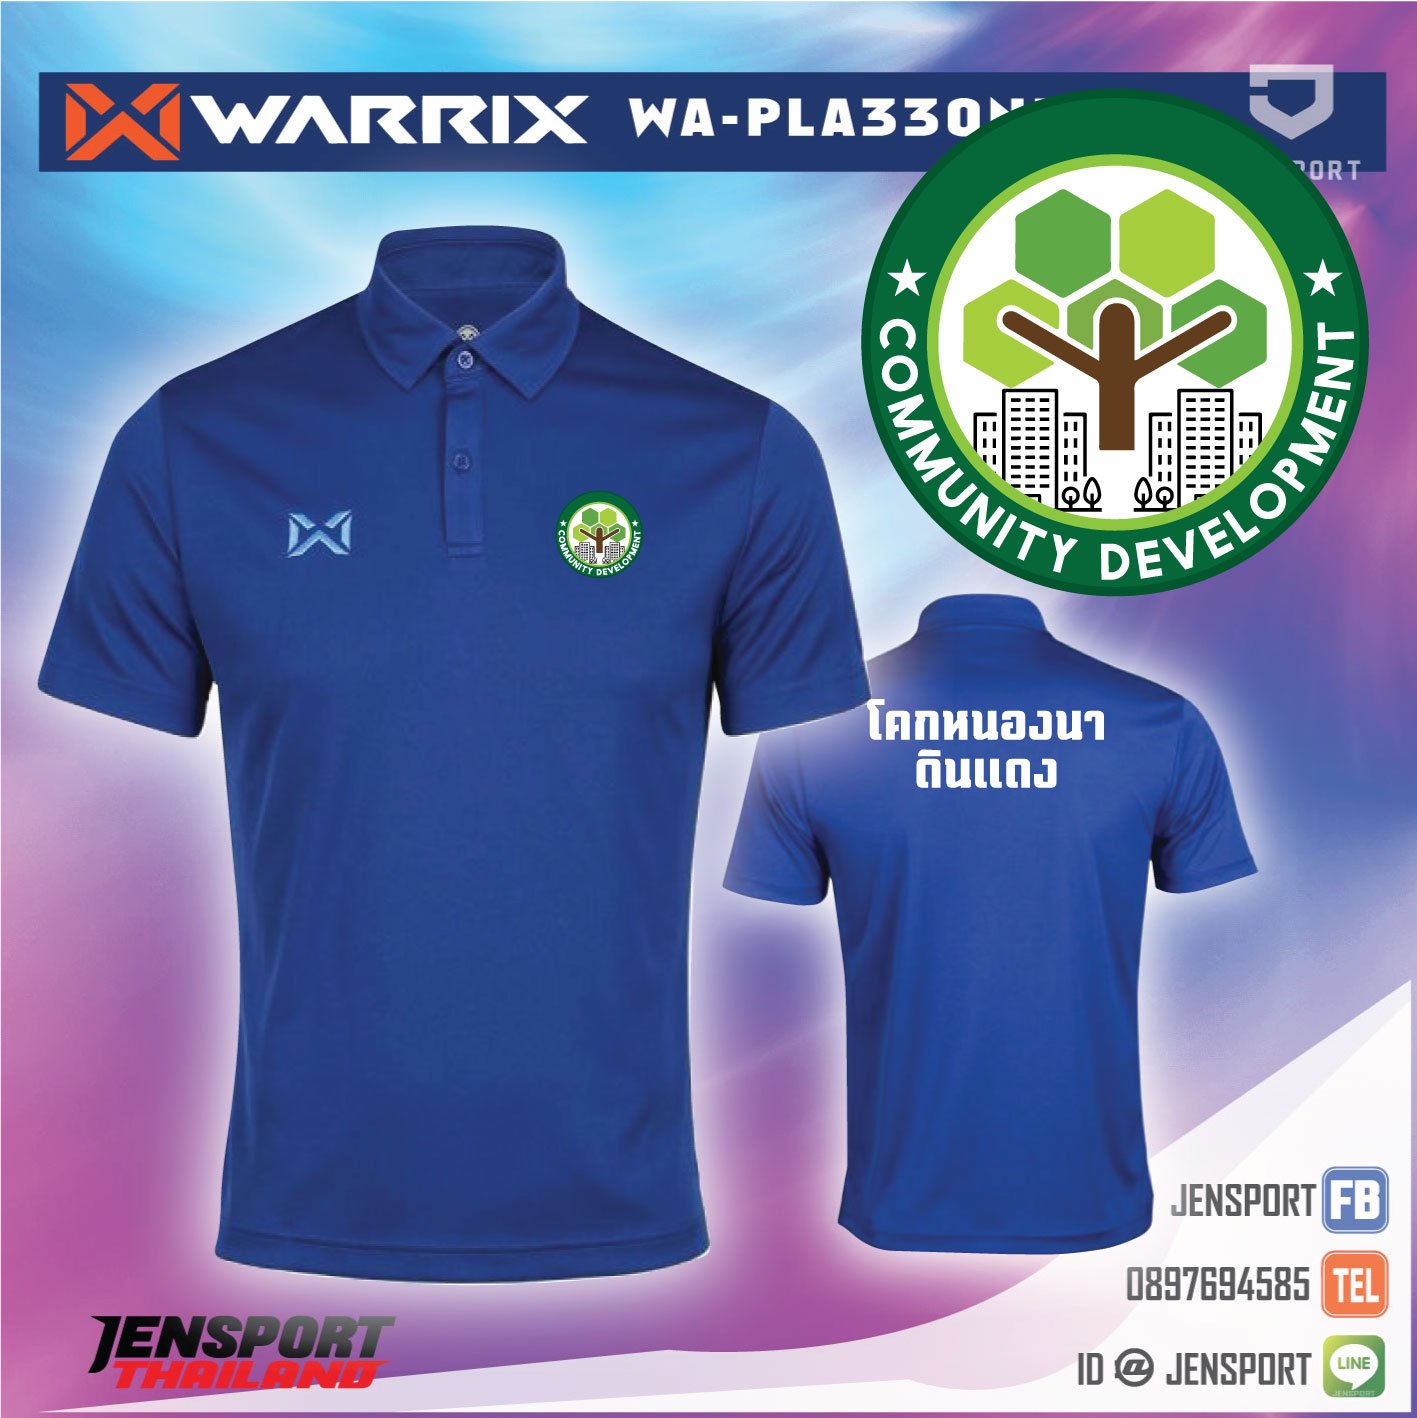 Warrix WA-PLA330 ทีม Community Development โคกหนองนา ดินแดง